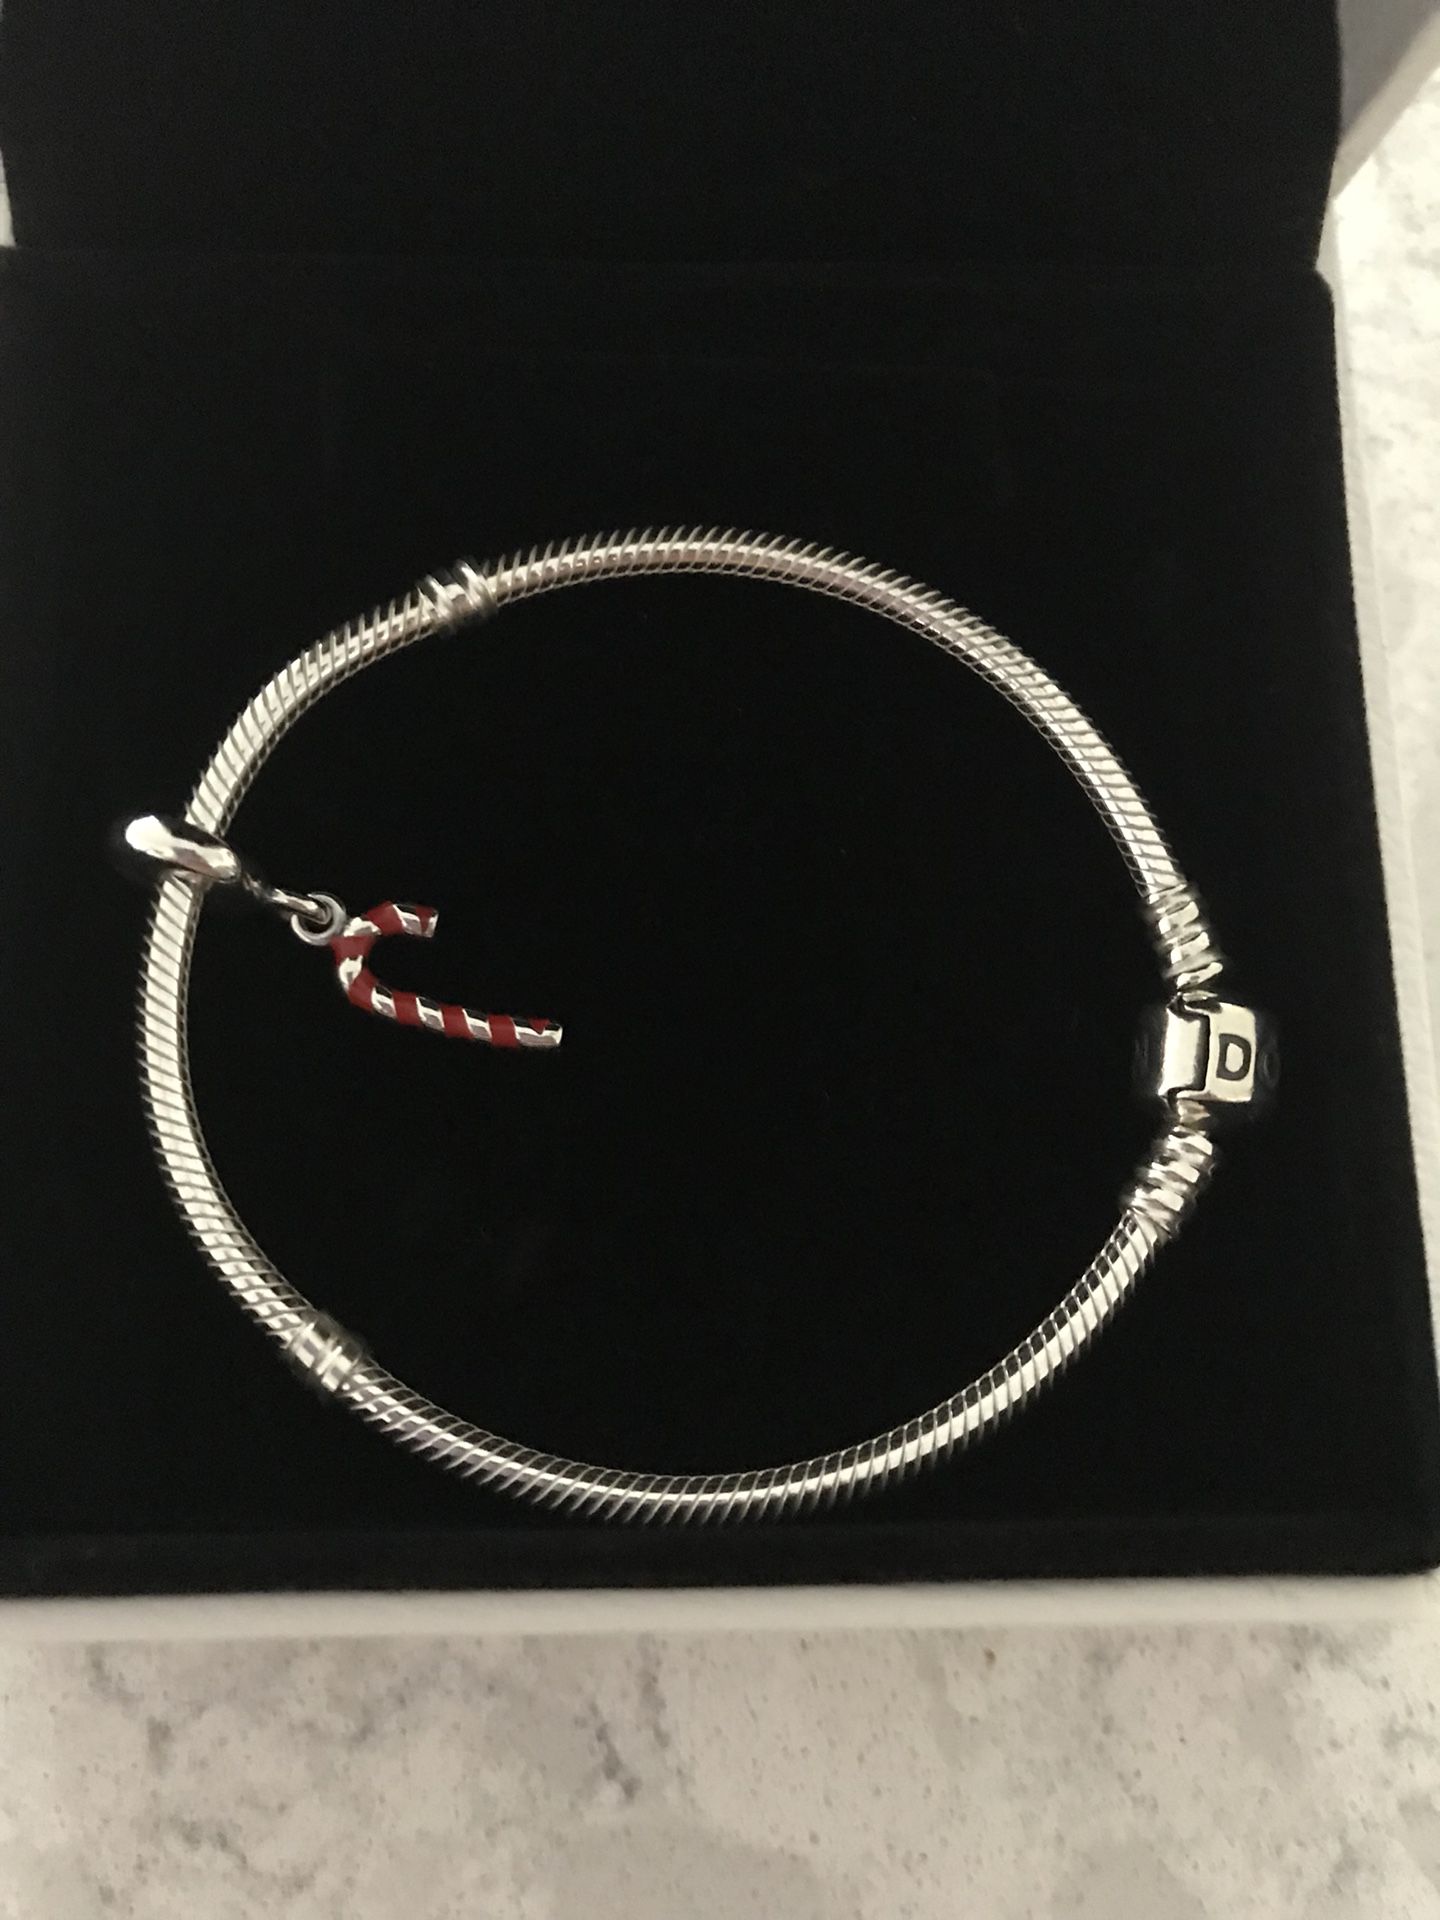 Pandora bracelet with Charm